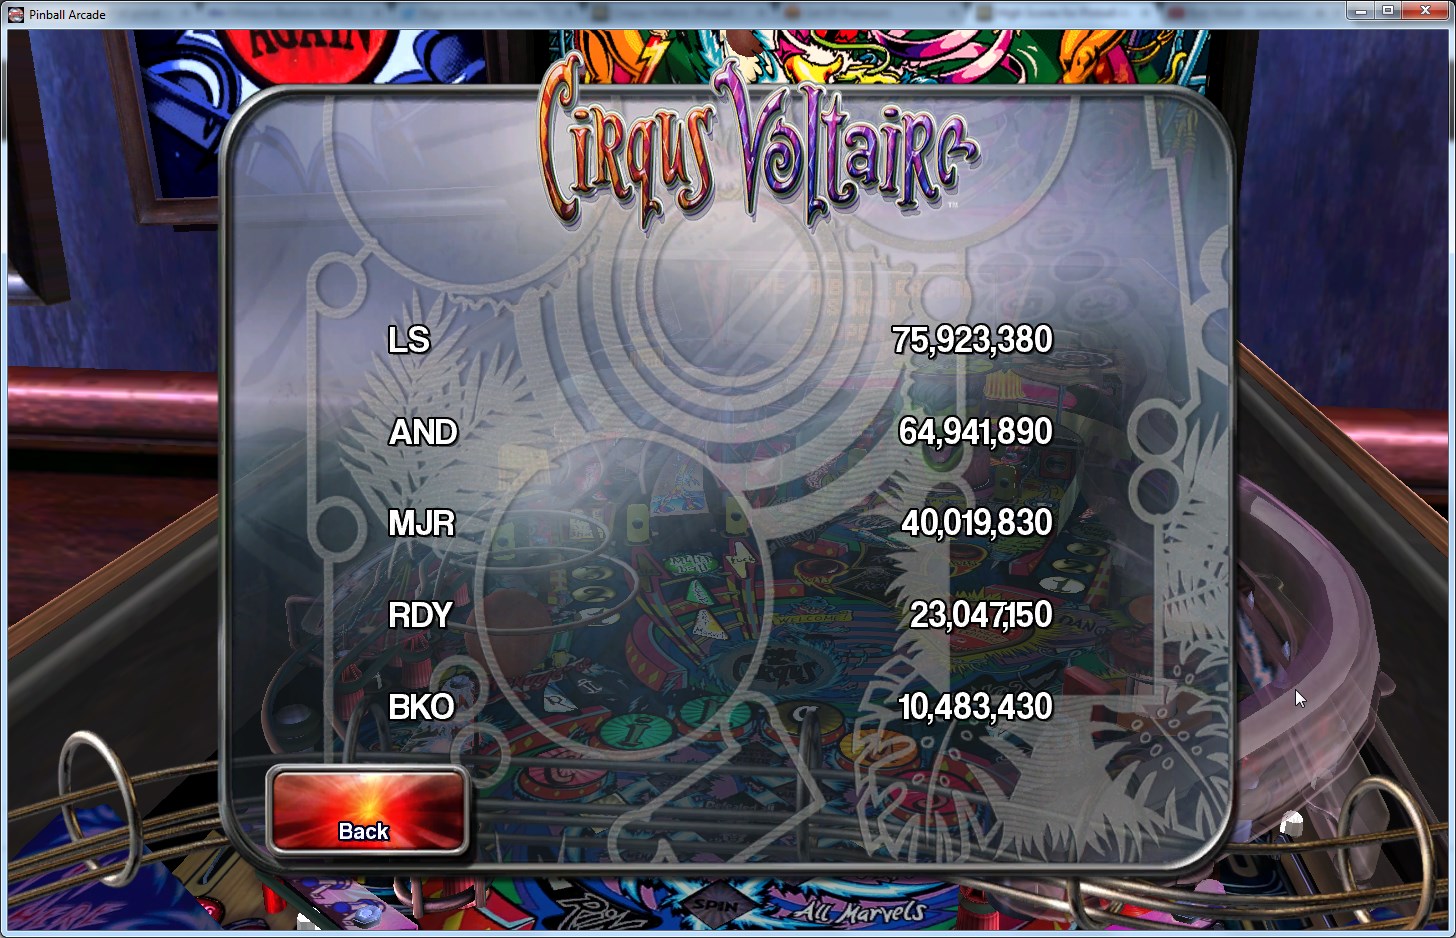 Pinball Arcade: Circus Voltaire 64,941,890 points